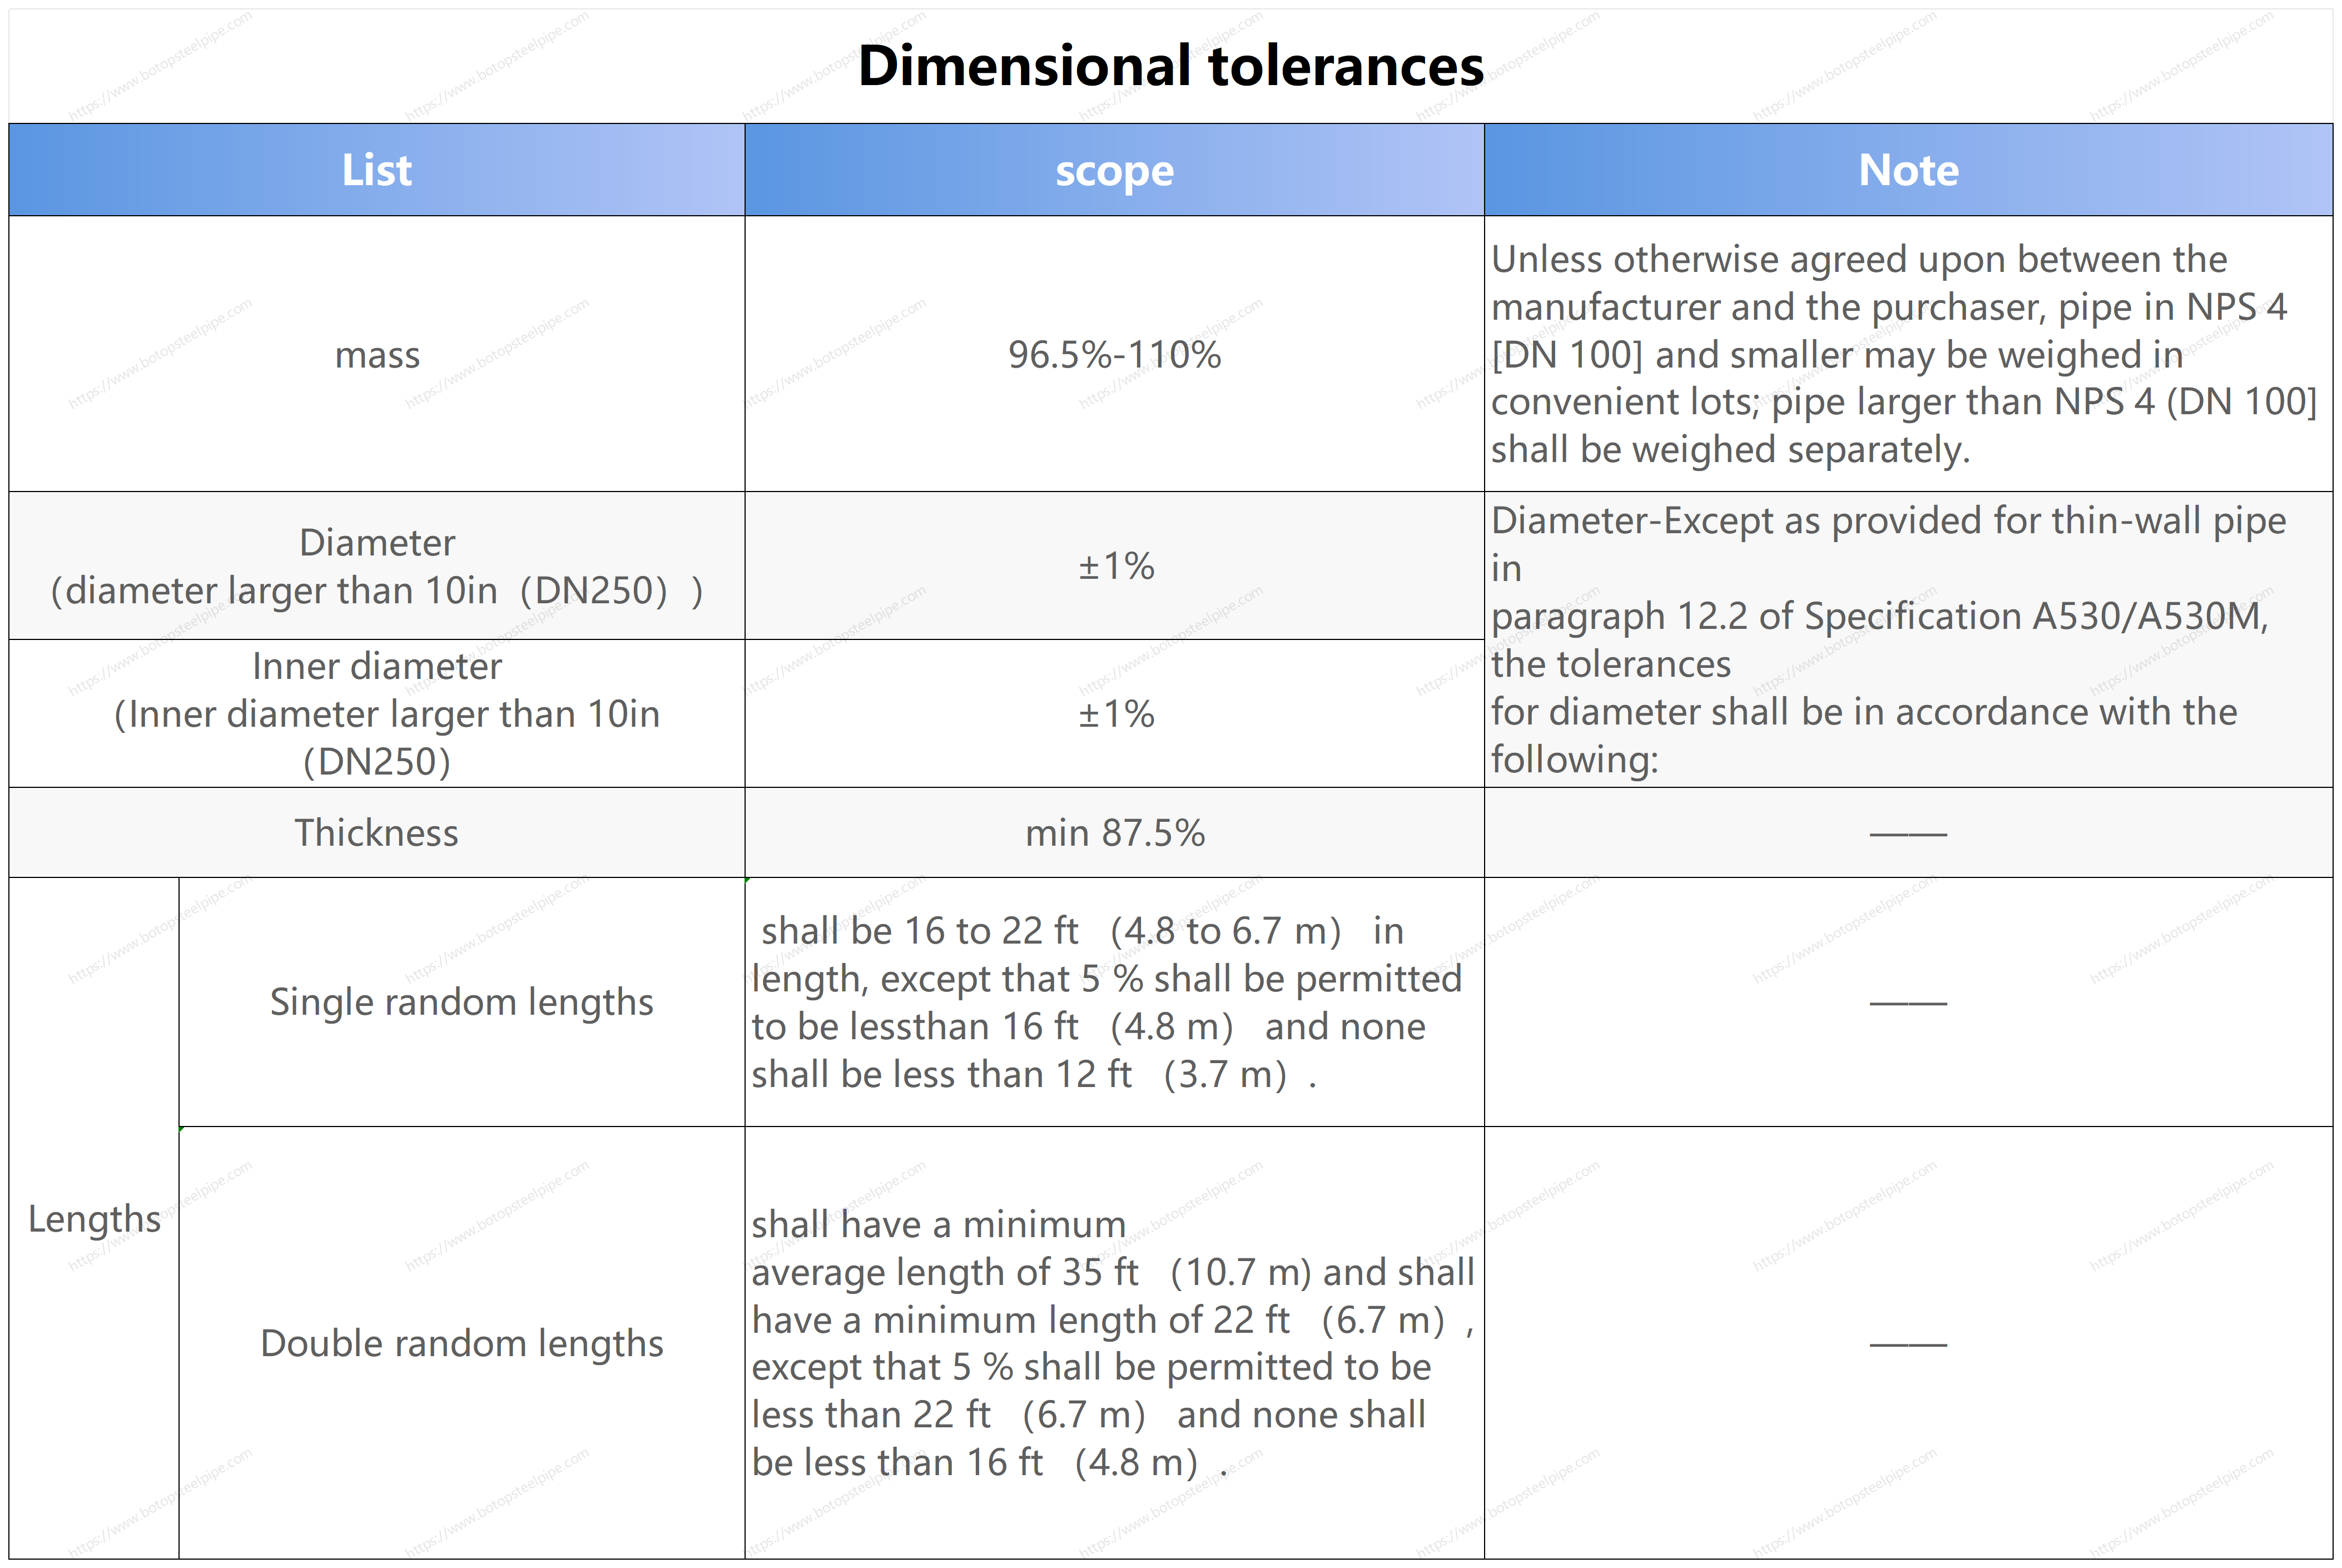 A106 _Dimensional tolerances